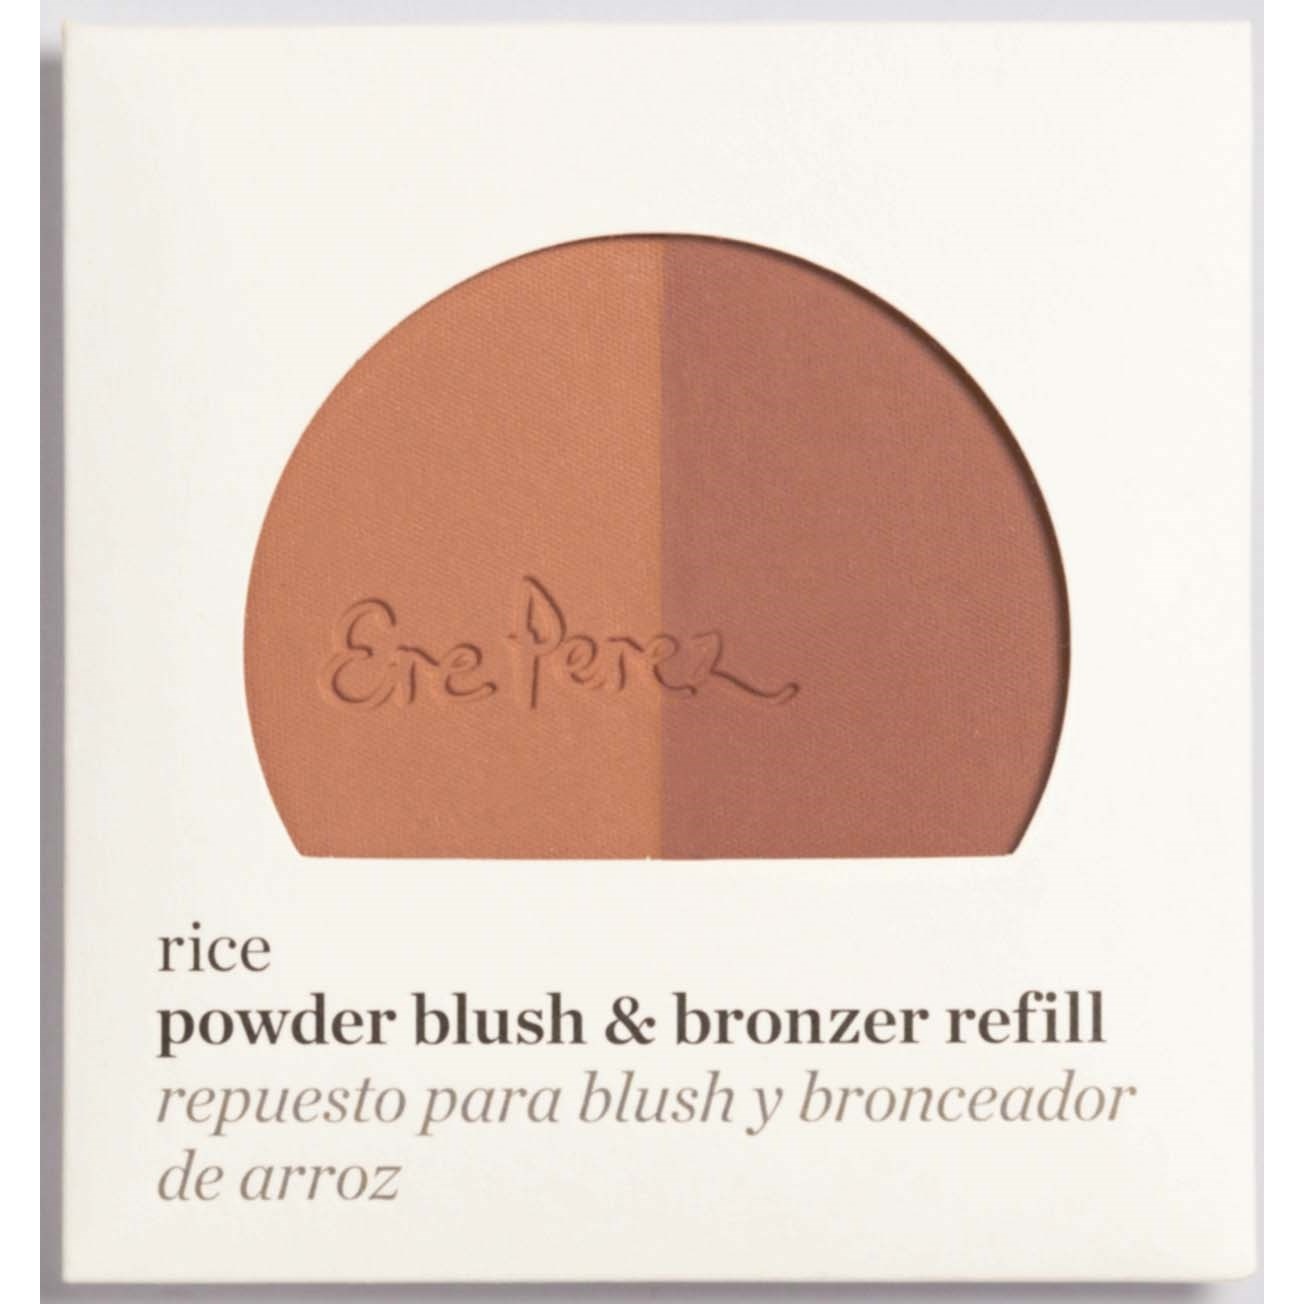 Läs mer om Ere Perez Rice Powder Blush & Bronzer Refill Roma